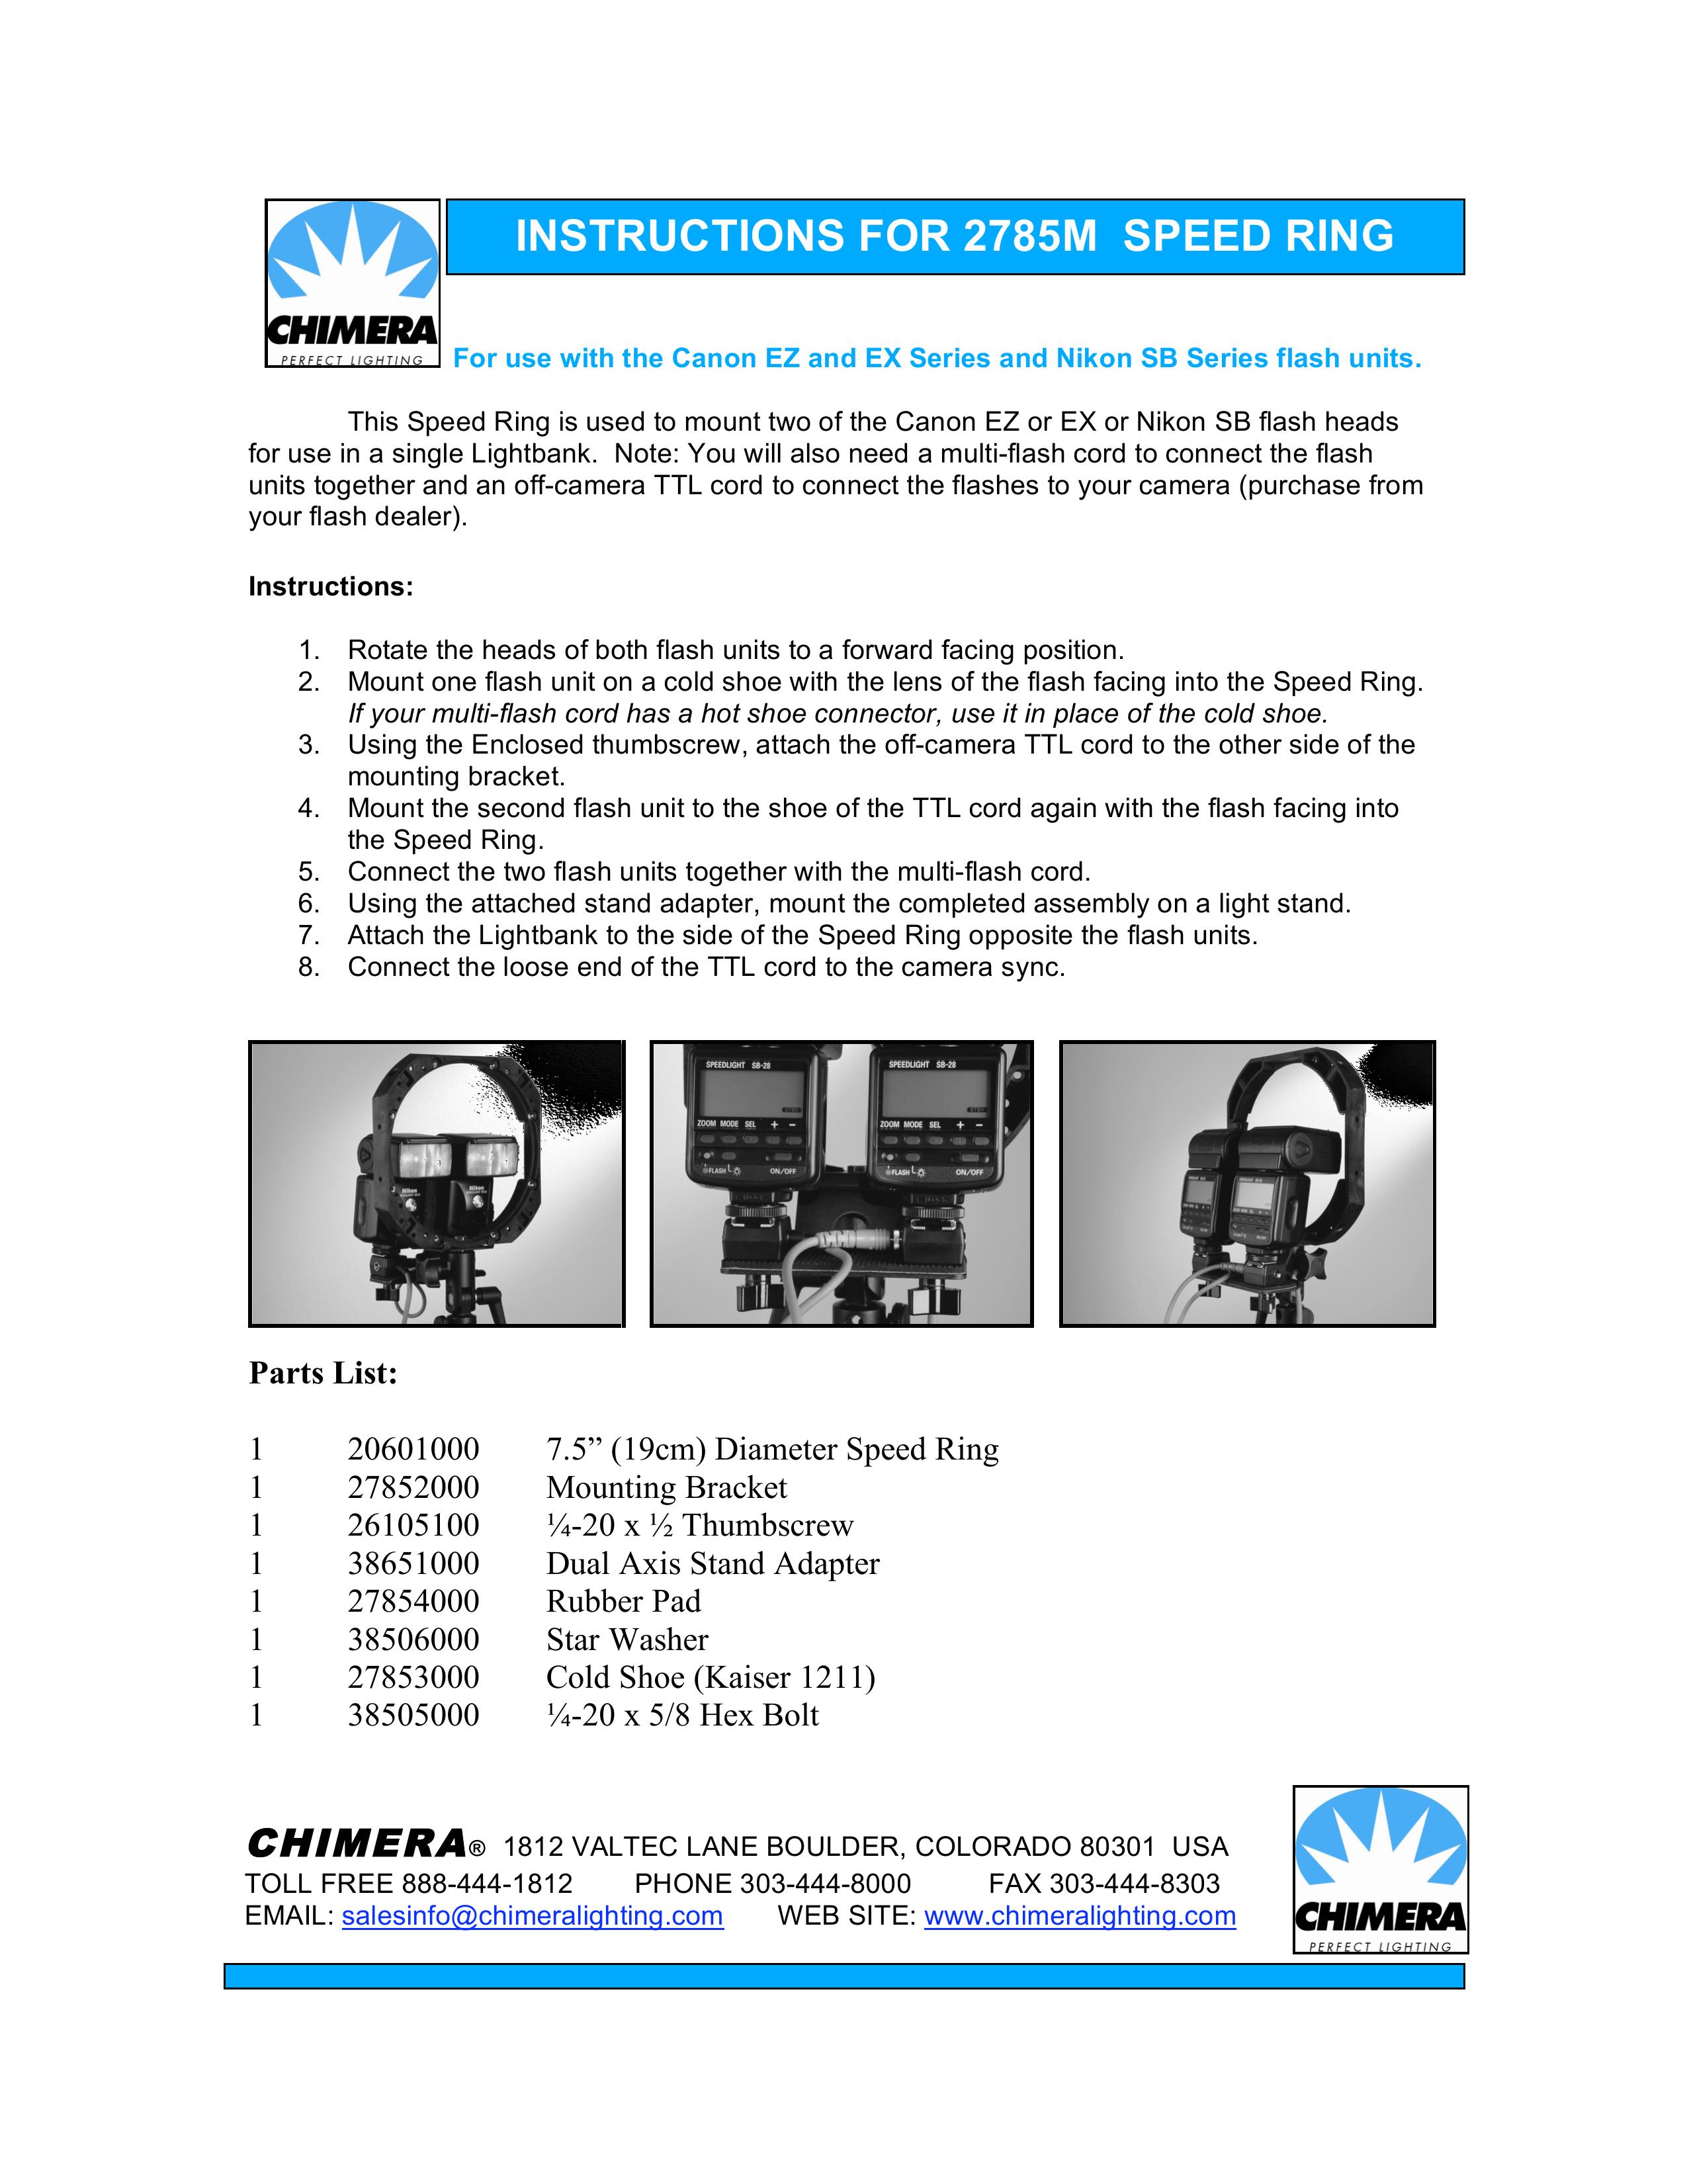 Chimera 2785M Camera Flash User Manual